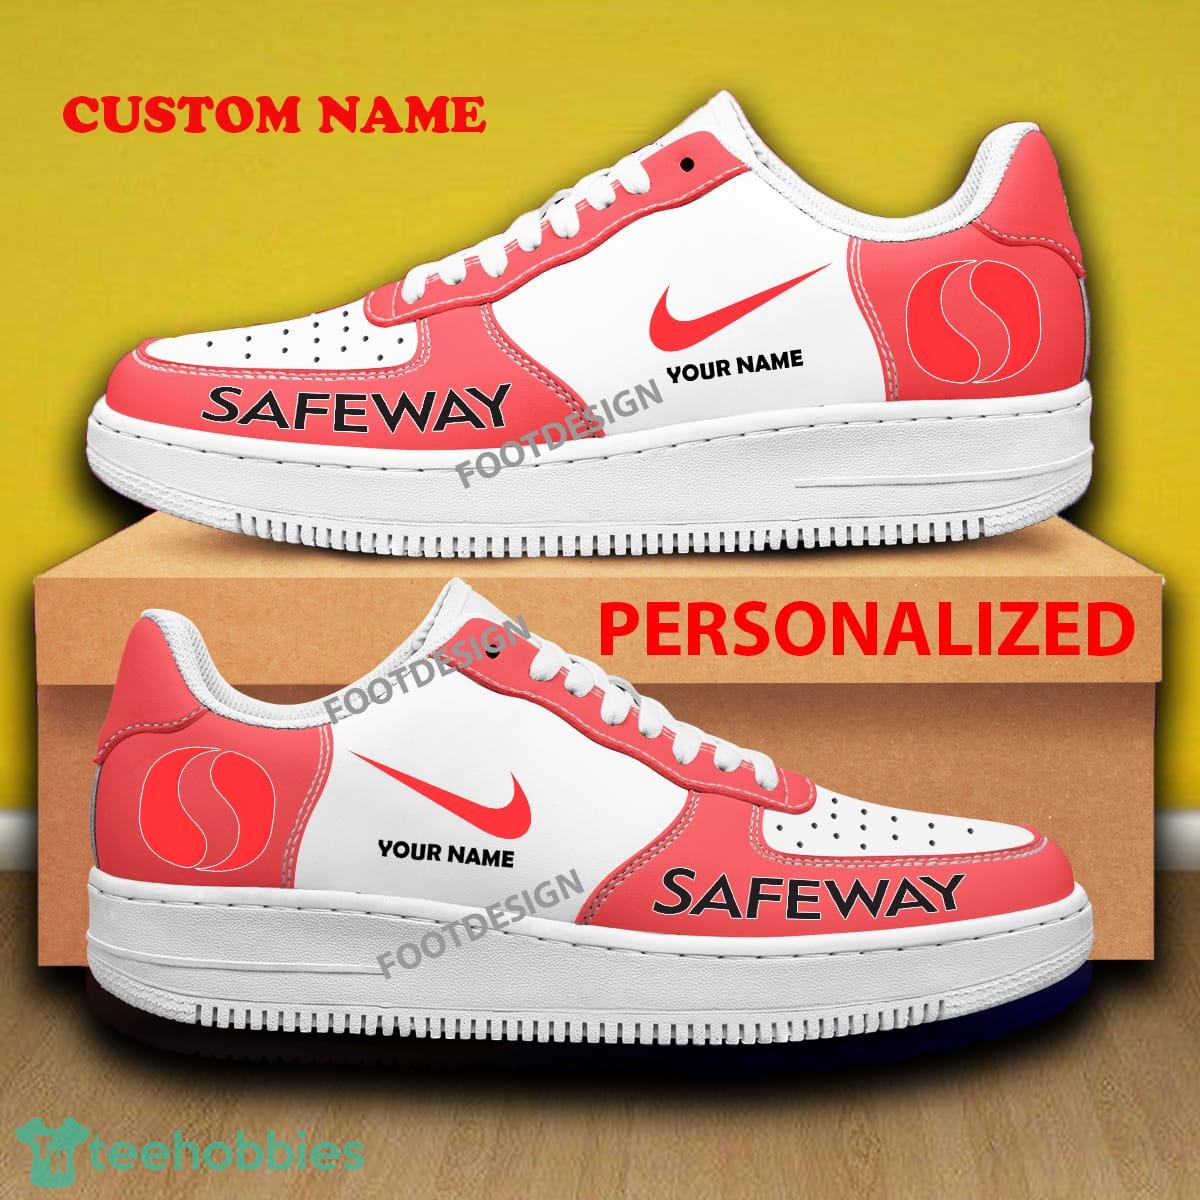 Custom Name Safeway Air Force 1 Sneakers Brand All Over Print Gift - Custom Name Safeway Air Force 1 Sneakers Brand All Over Print Gift